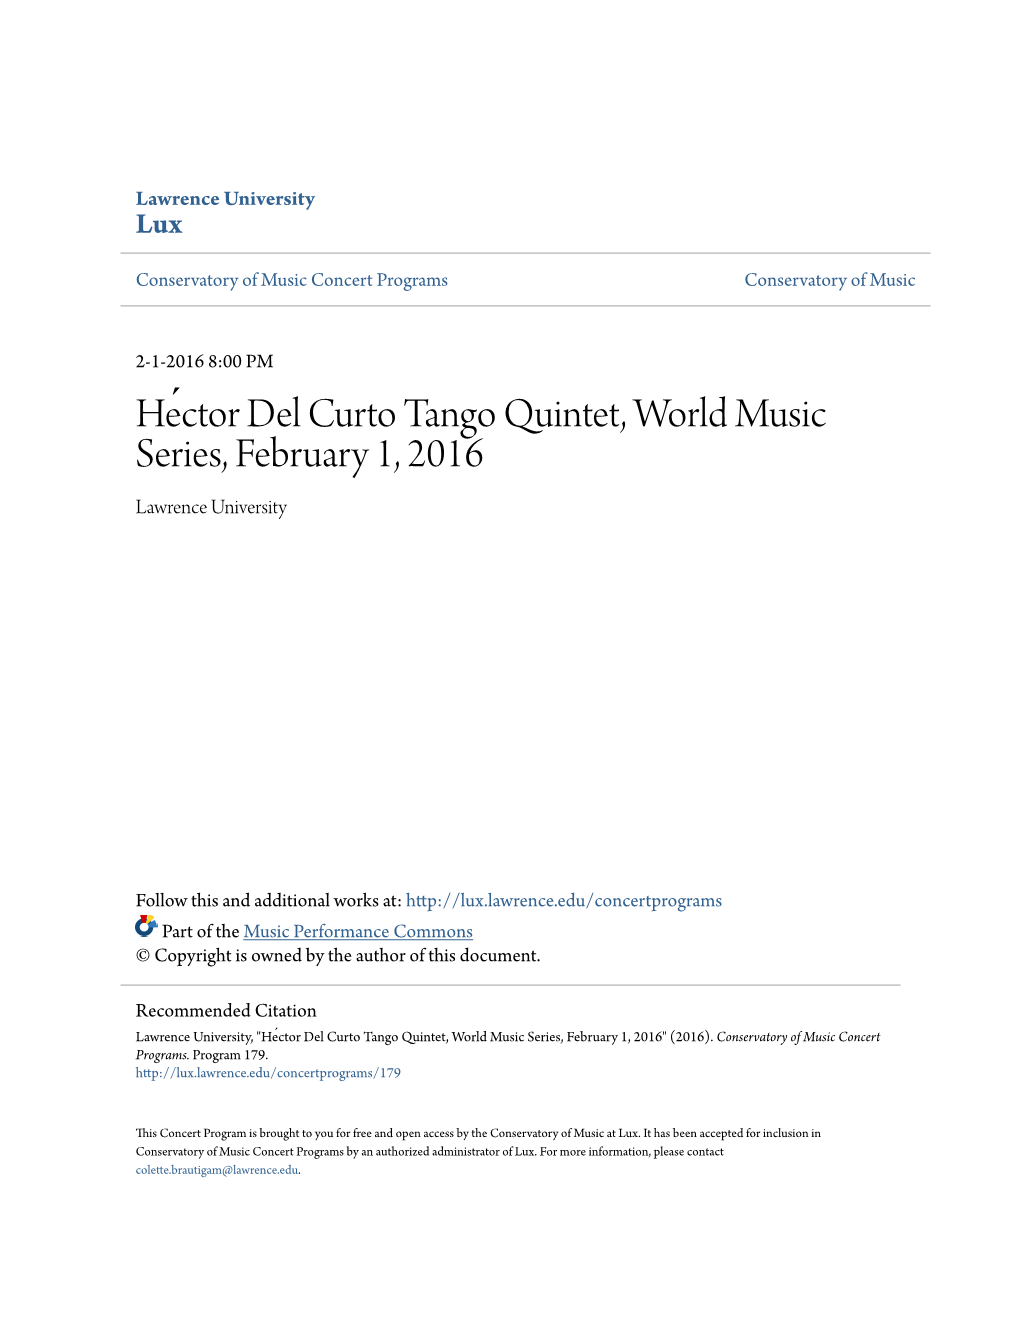 Héctor Del Curto Tango Quintet, World Music Series, February 1, 2016